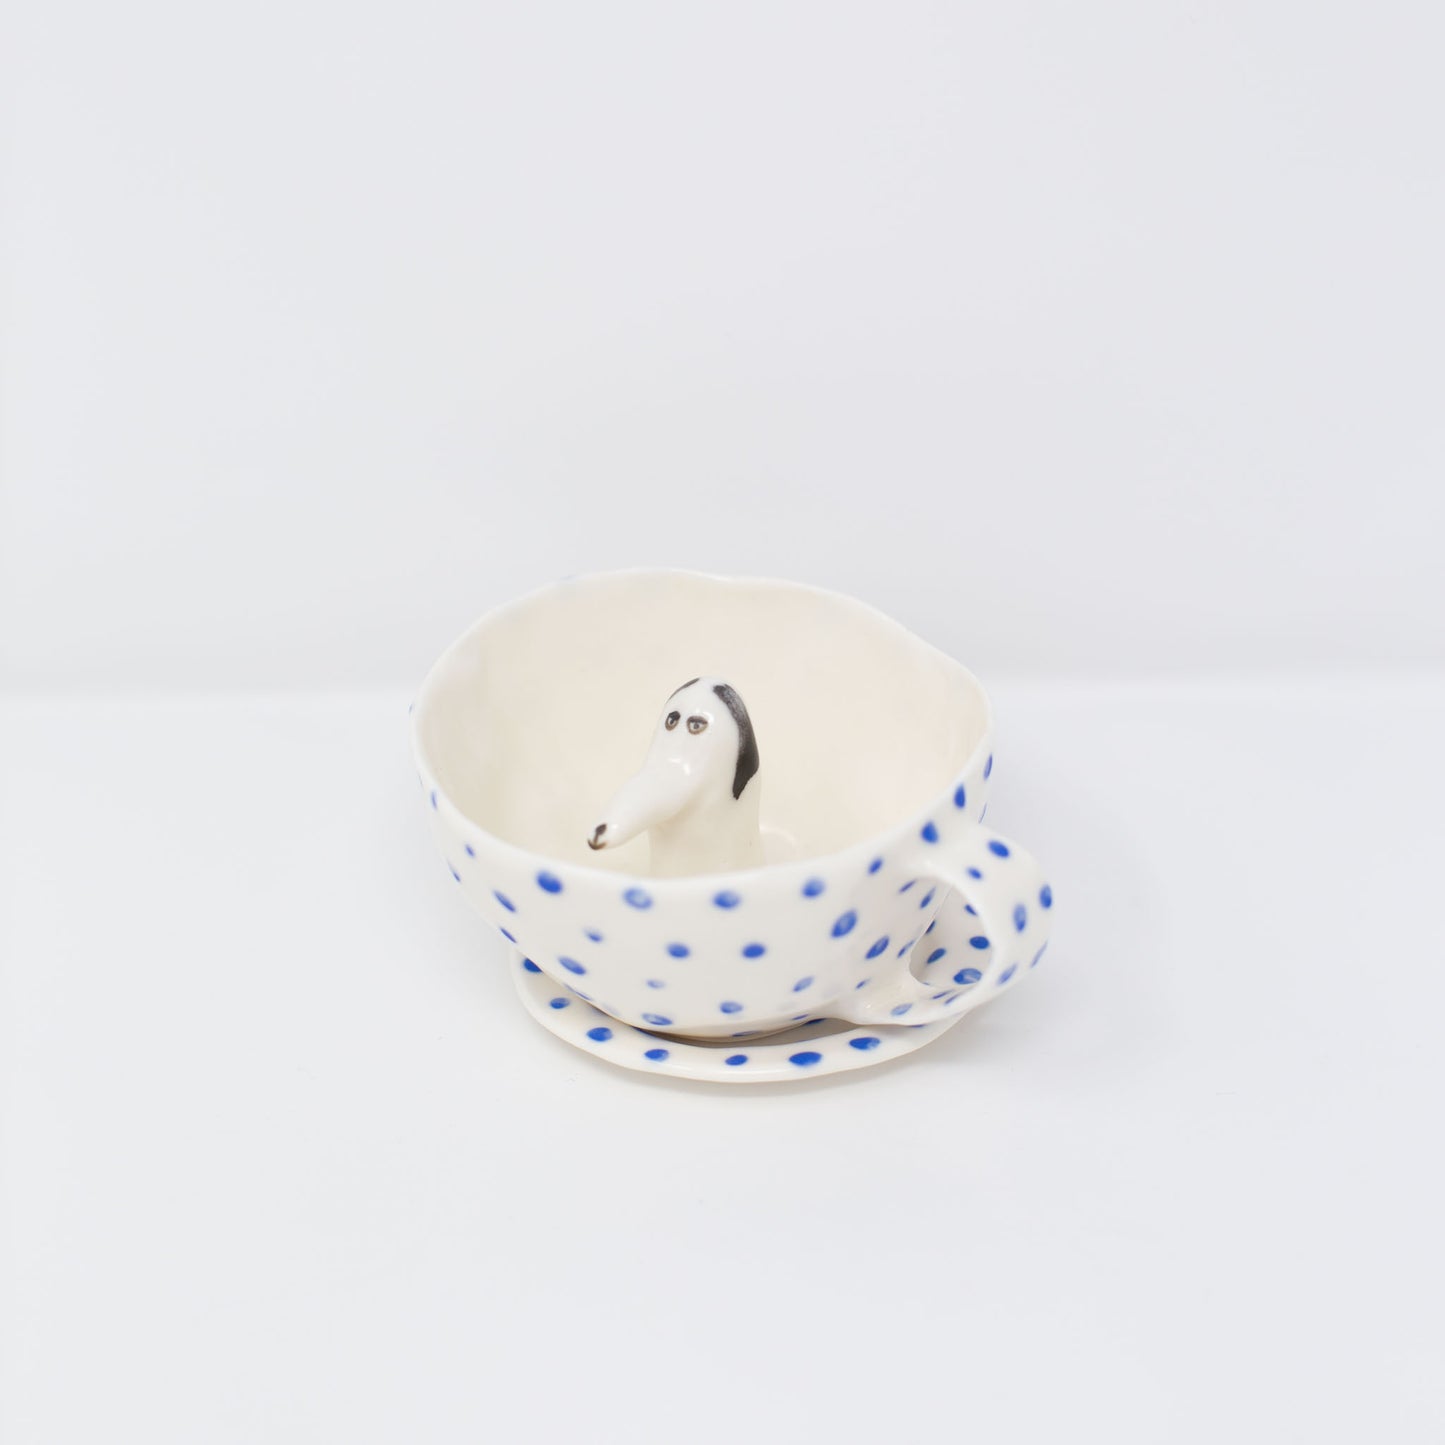 Blue Polka Dot Dog Cup by Eleonor Bostrom